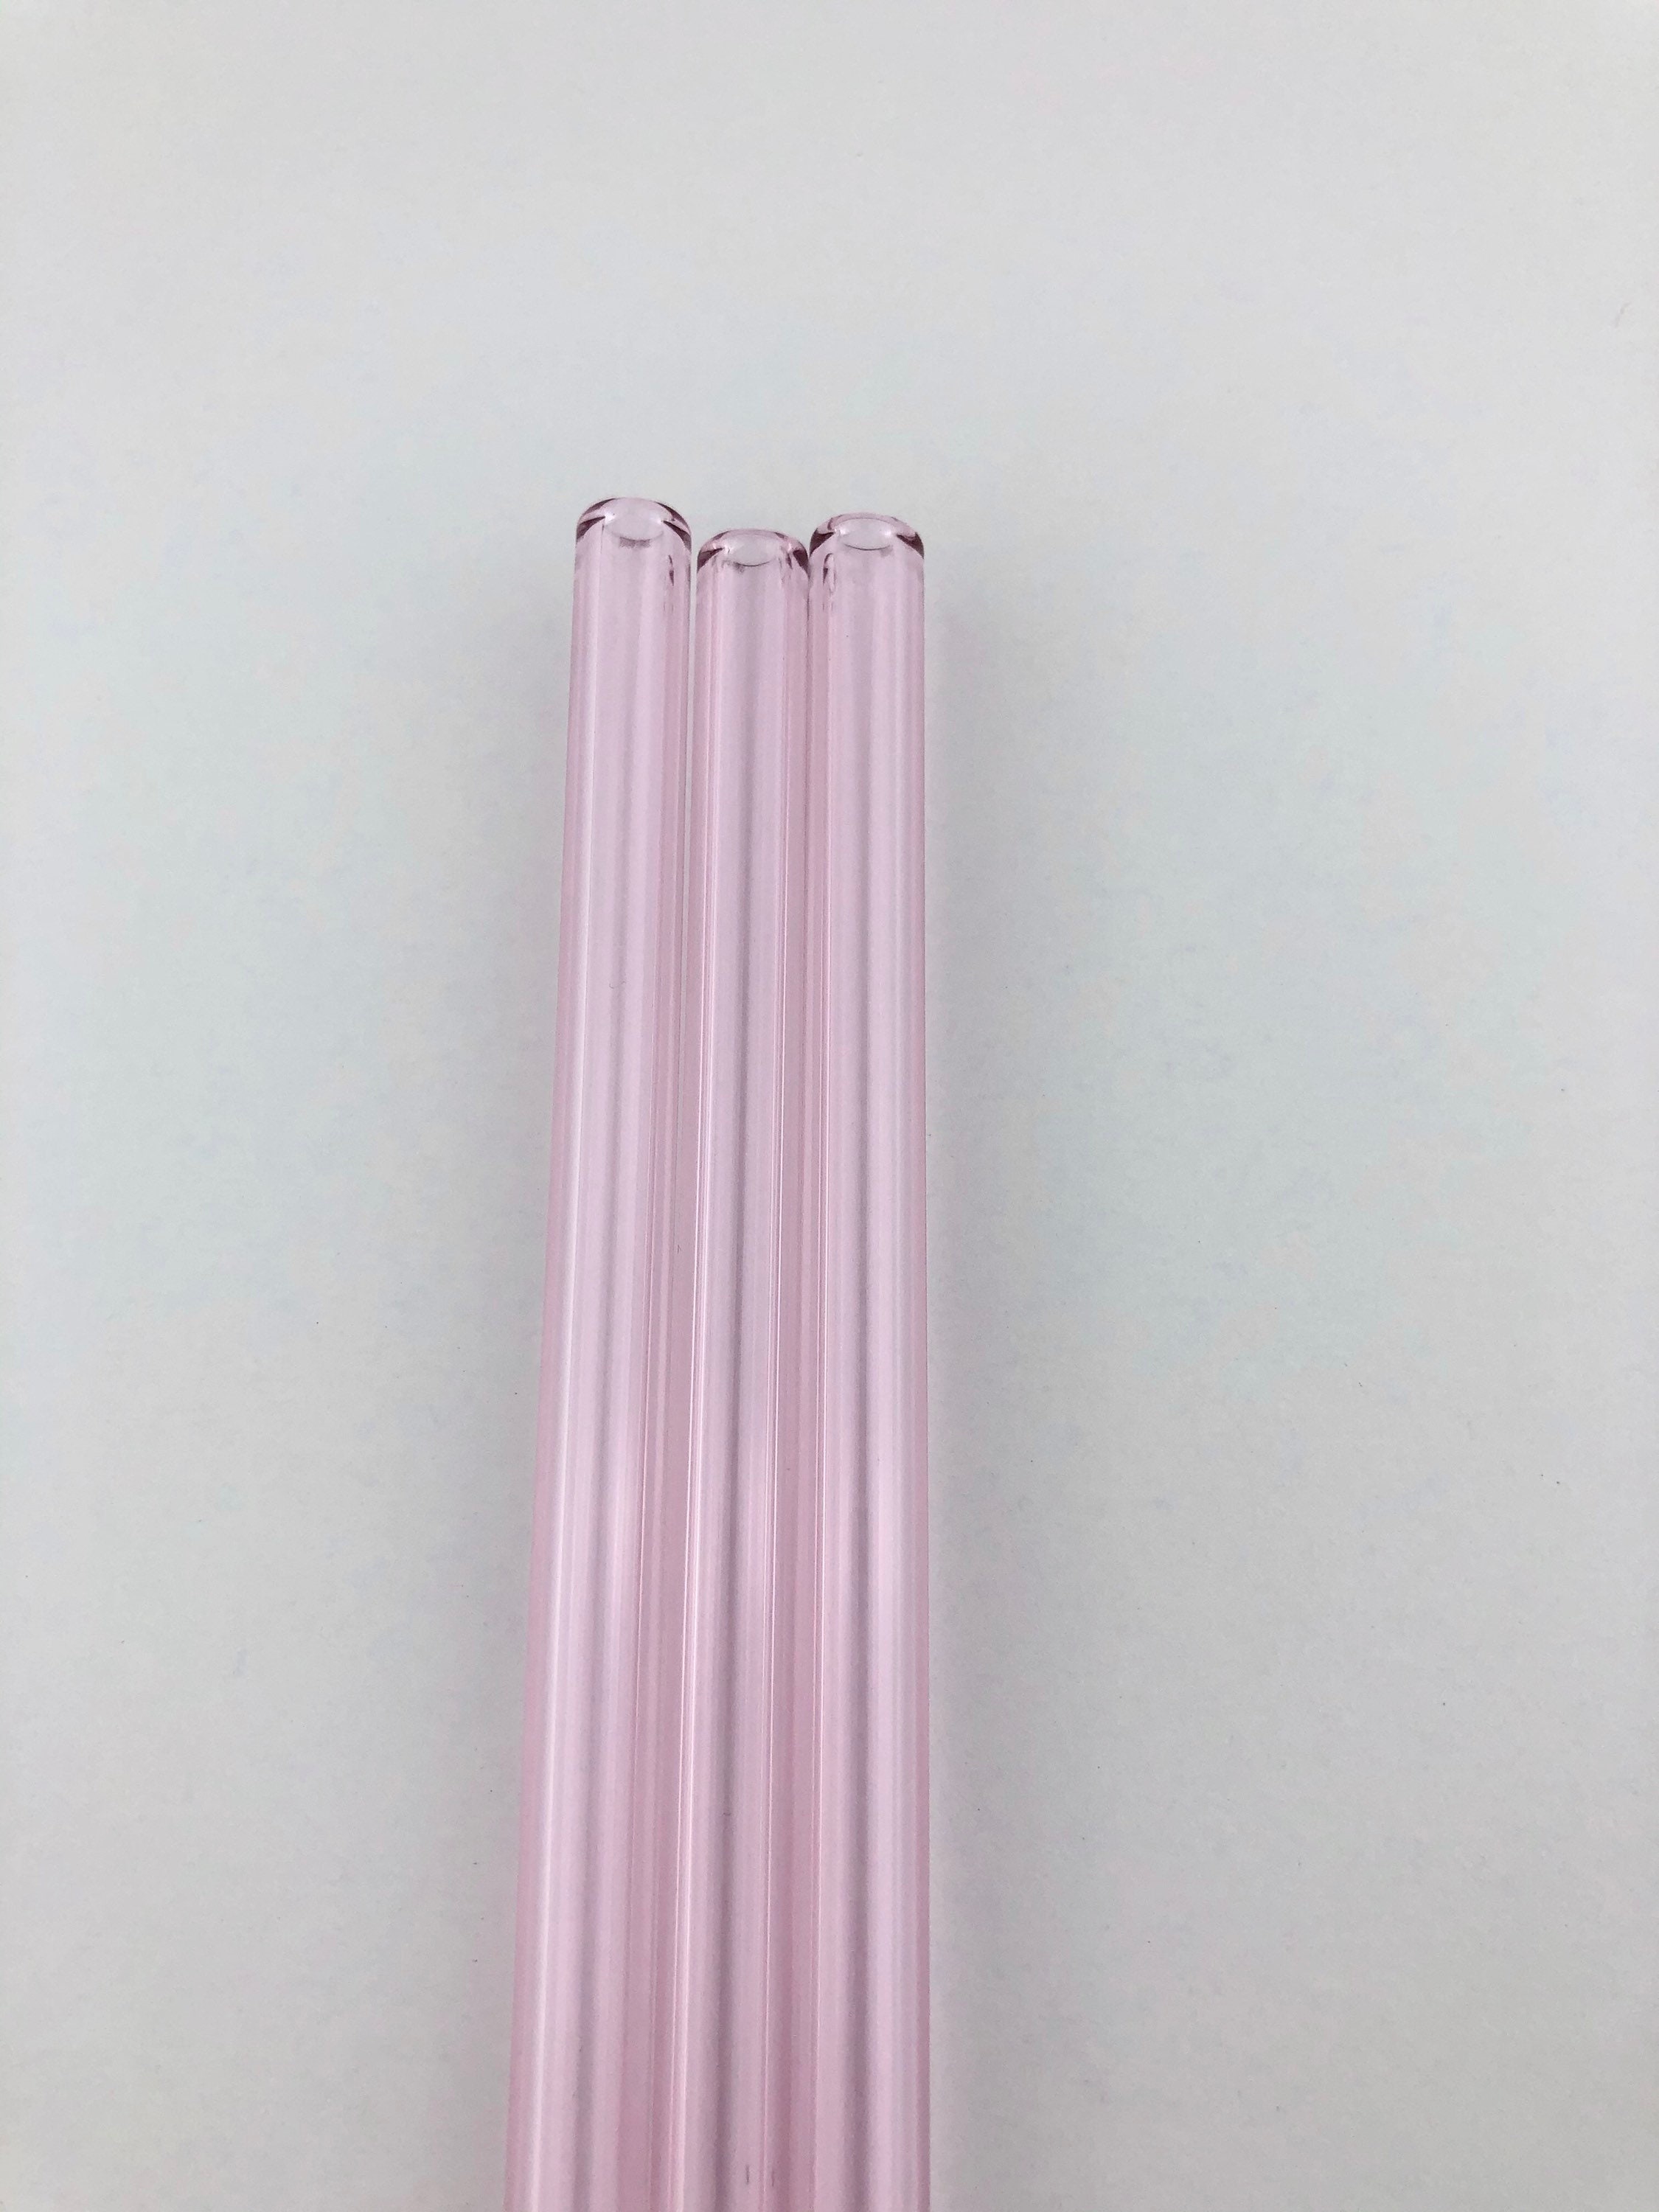 Light Pink Glass Straw